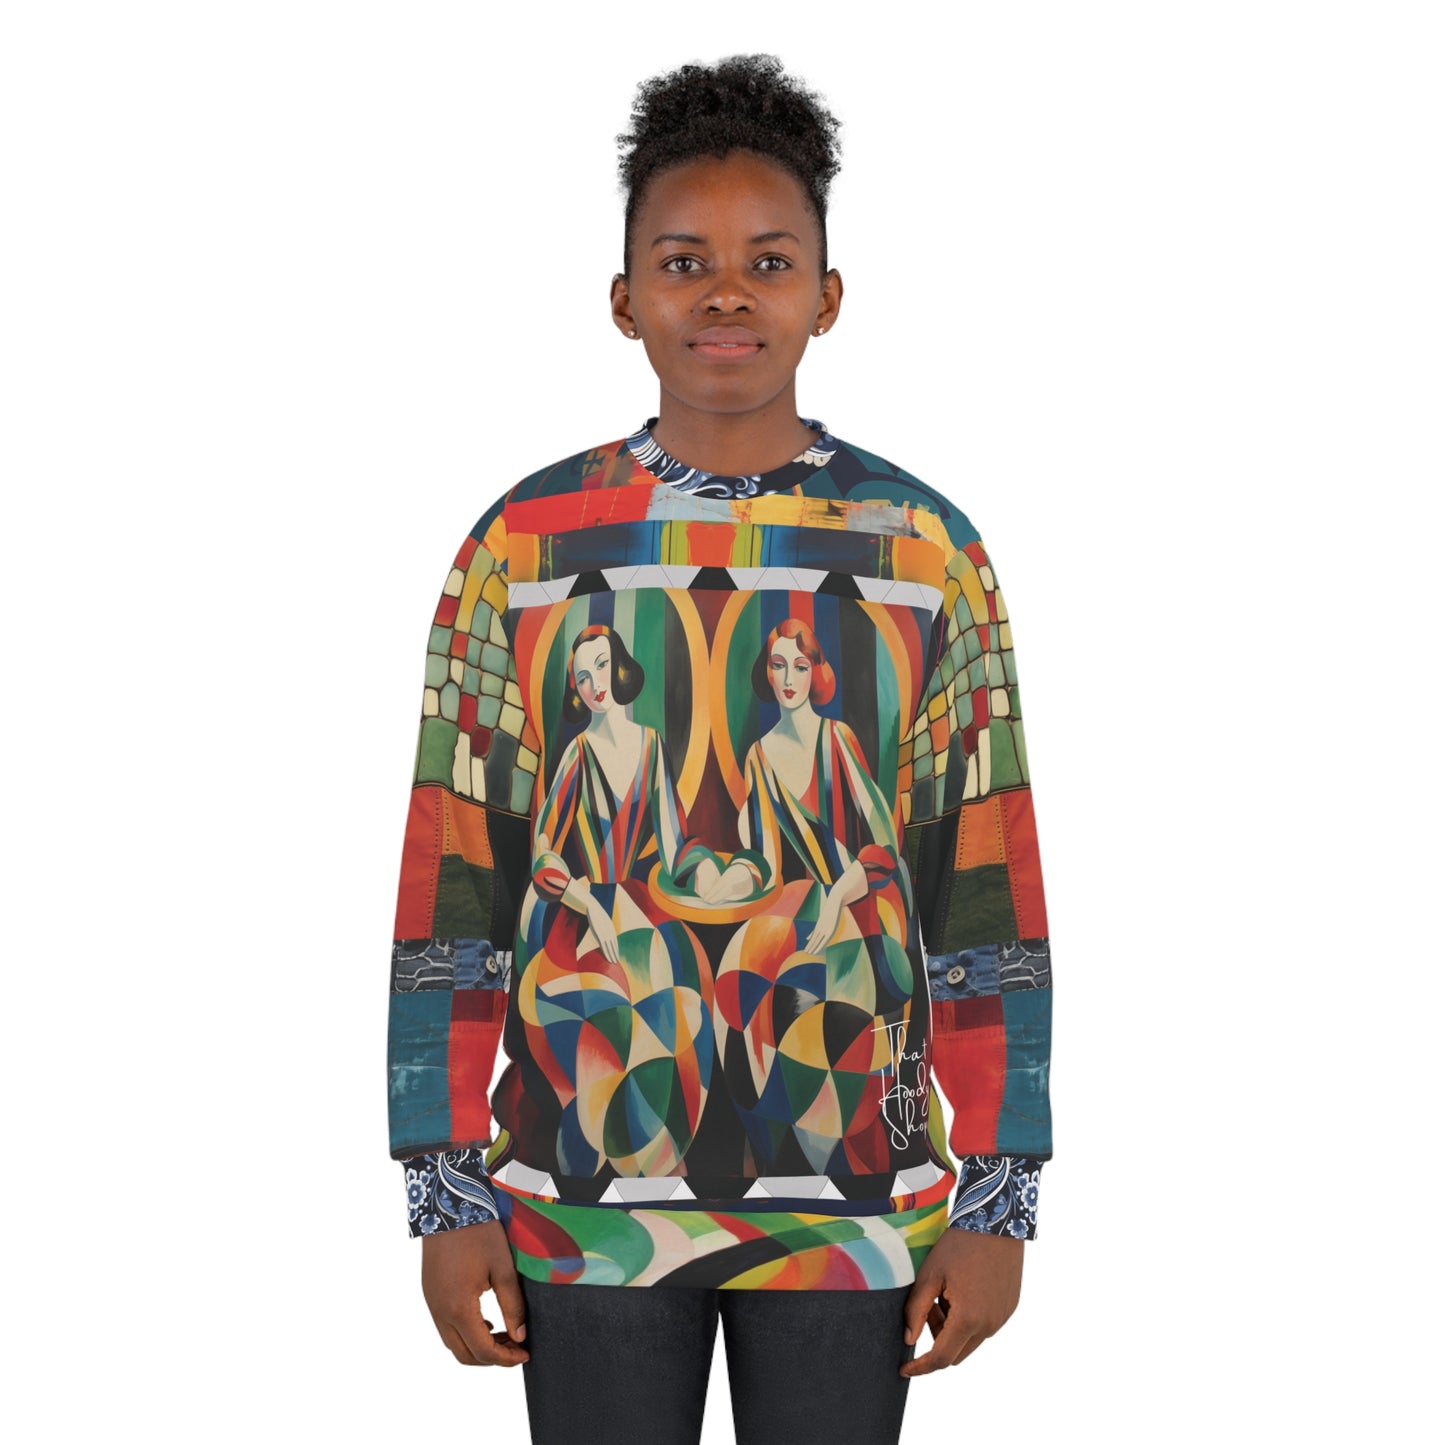 Deco Girls - More Than Friends Unisex Sweatshirt